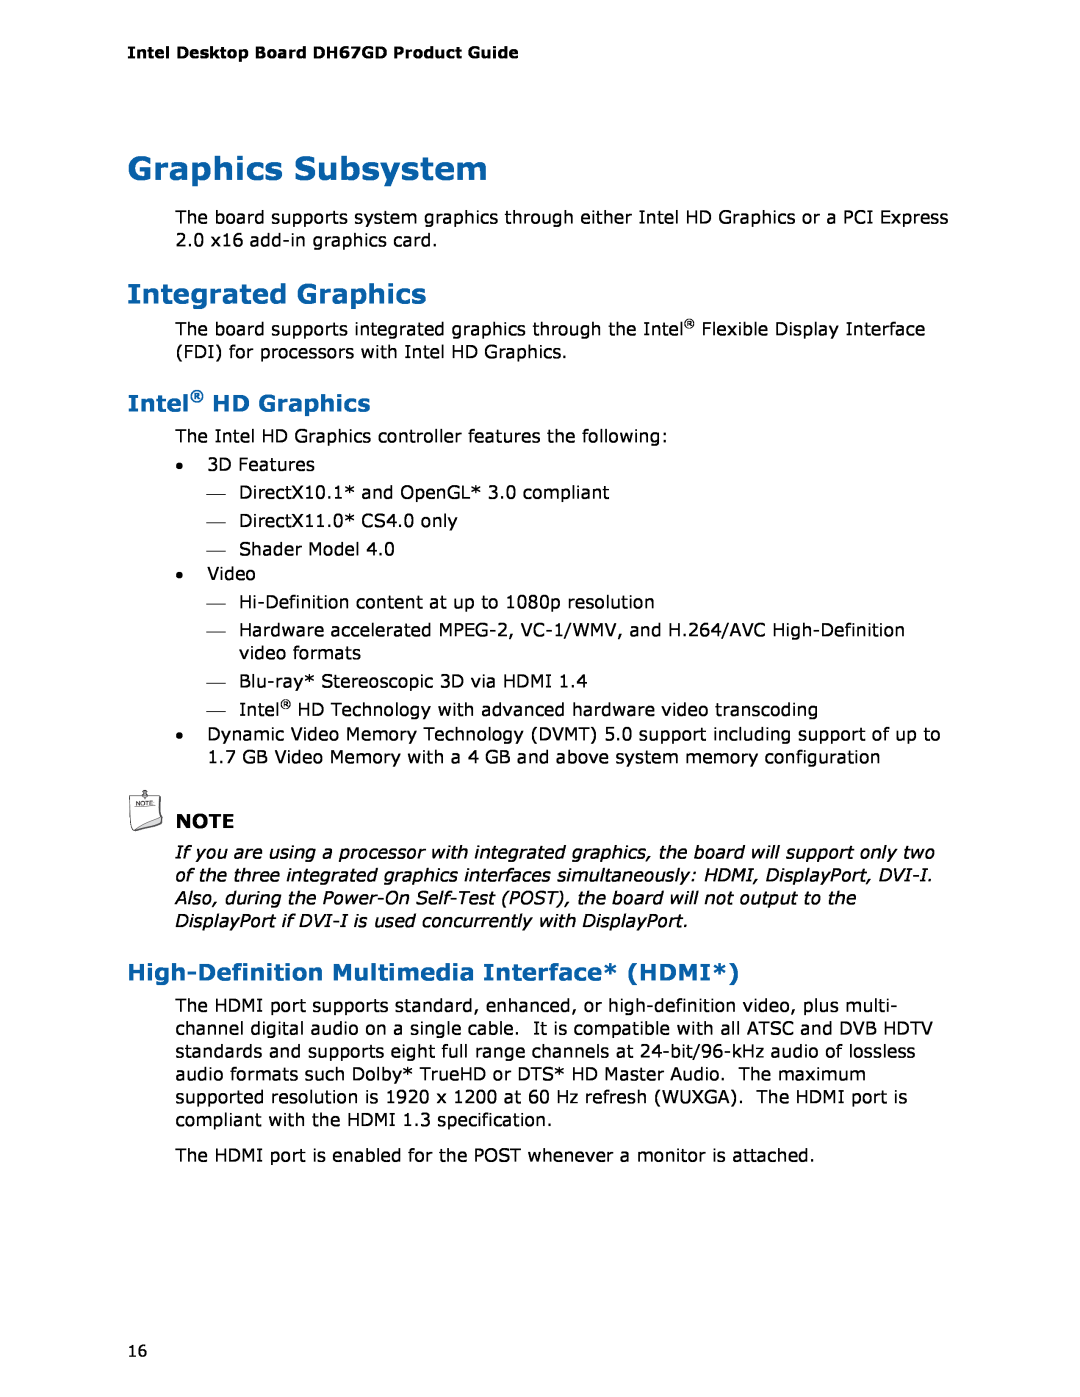 Intel BLKDH67GDB3 Graphics Subsystem, Integrated Graphics, Intel HD Graphics, High-Definition Multimedia Interface* HDMI 